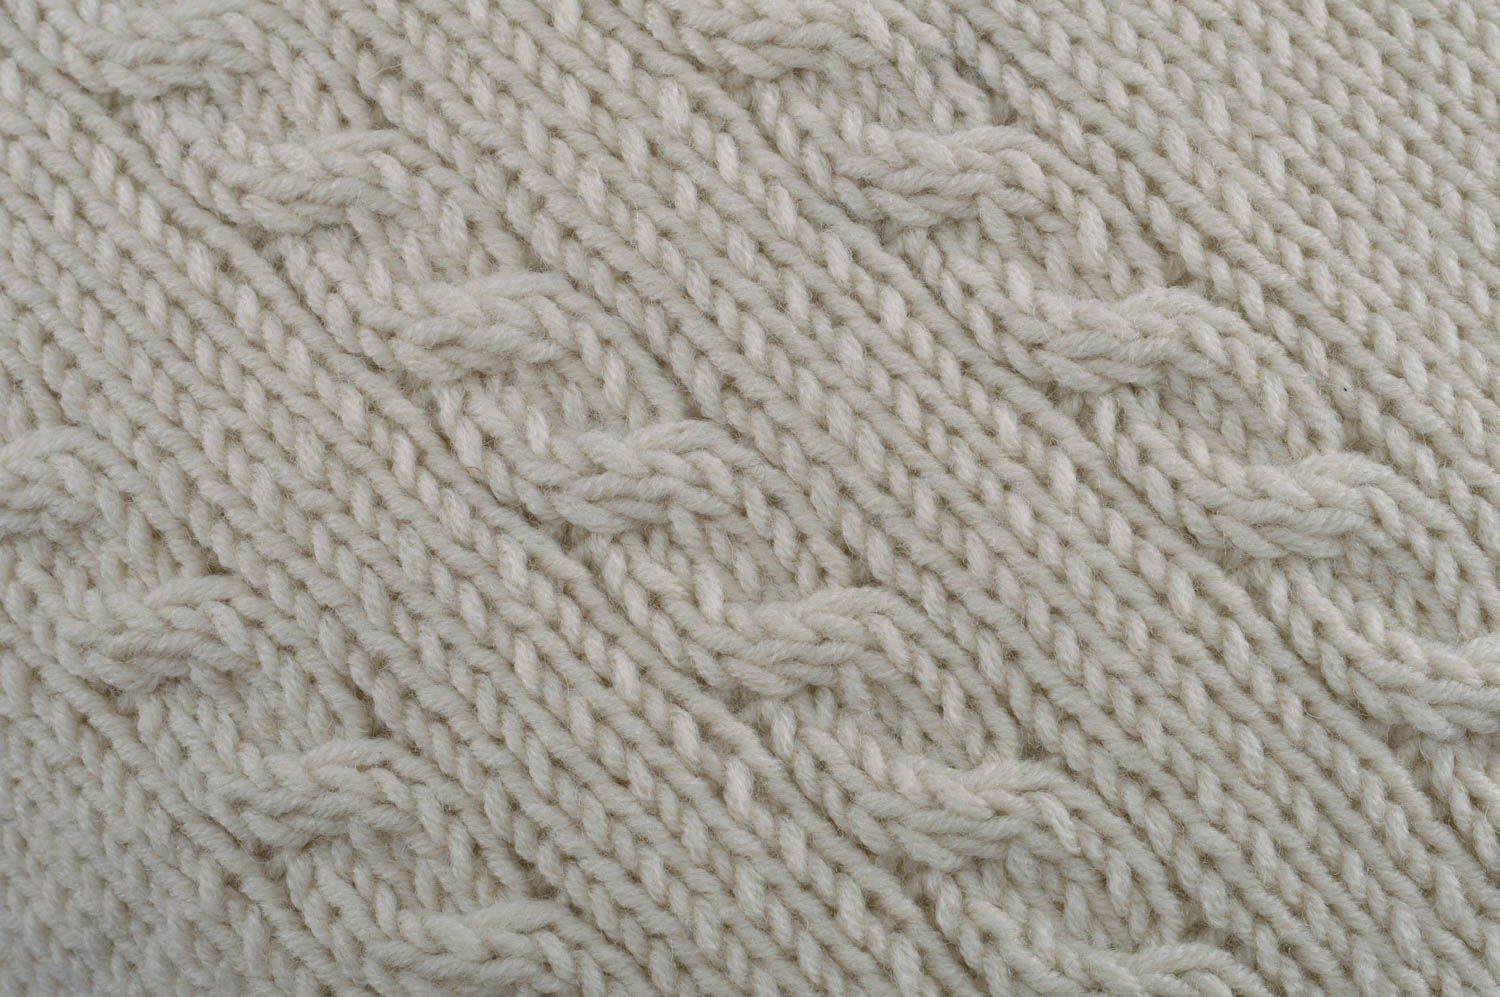 Handmade knitted interior decorative white soft cushion for home interior photo 3